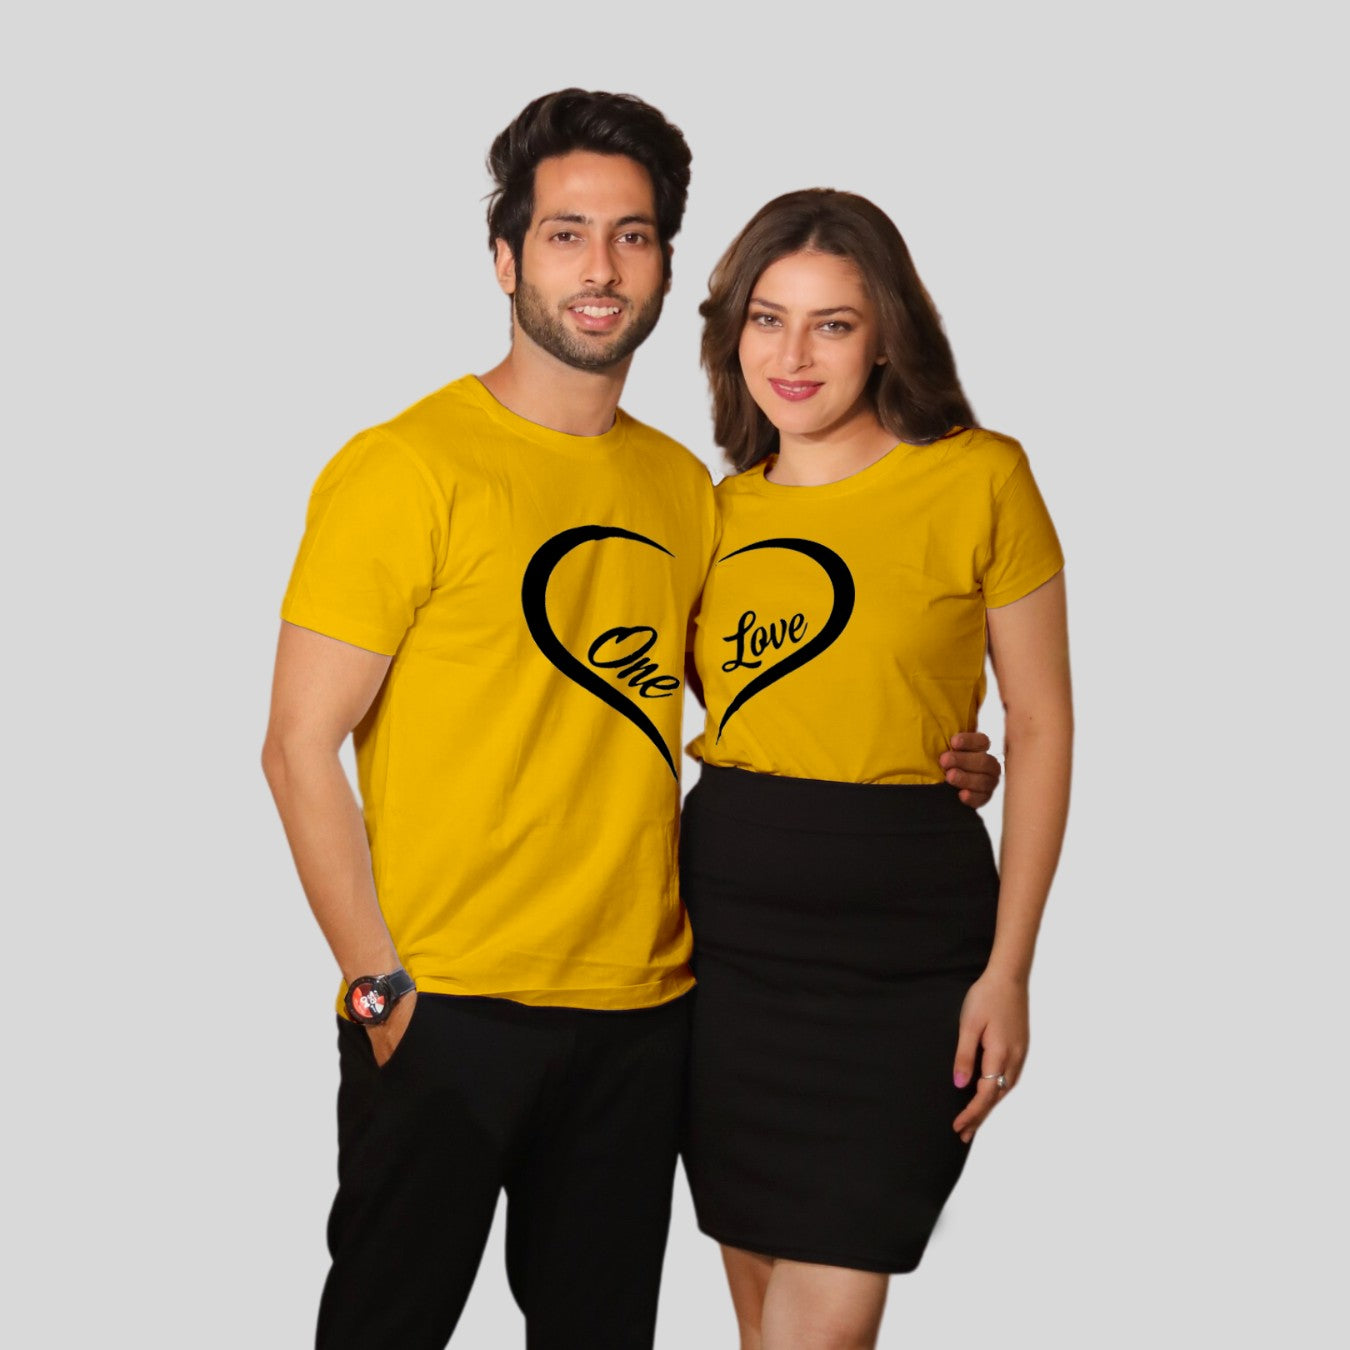 couples shirts designs